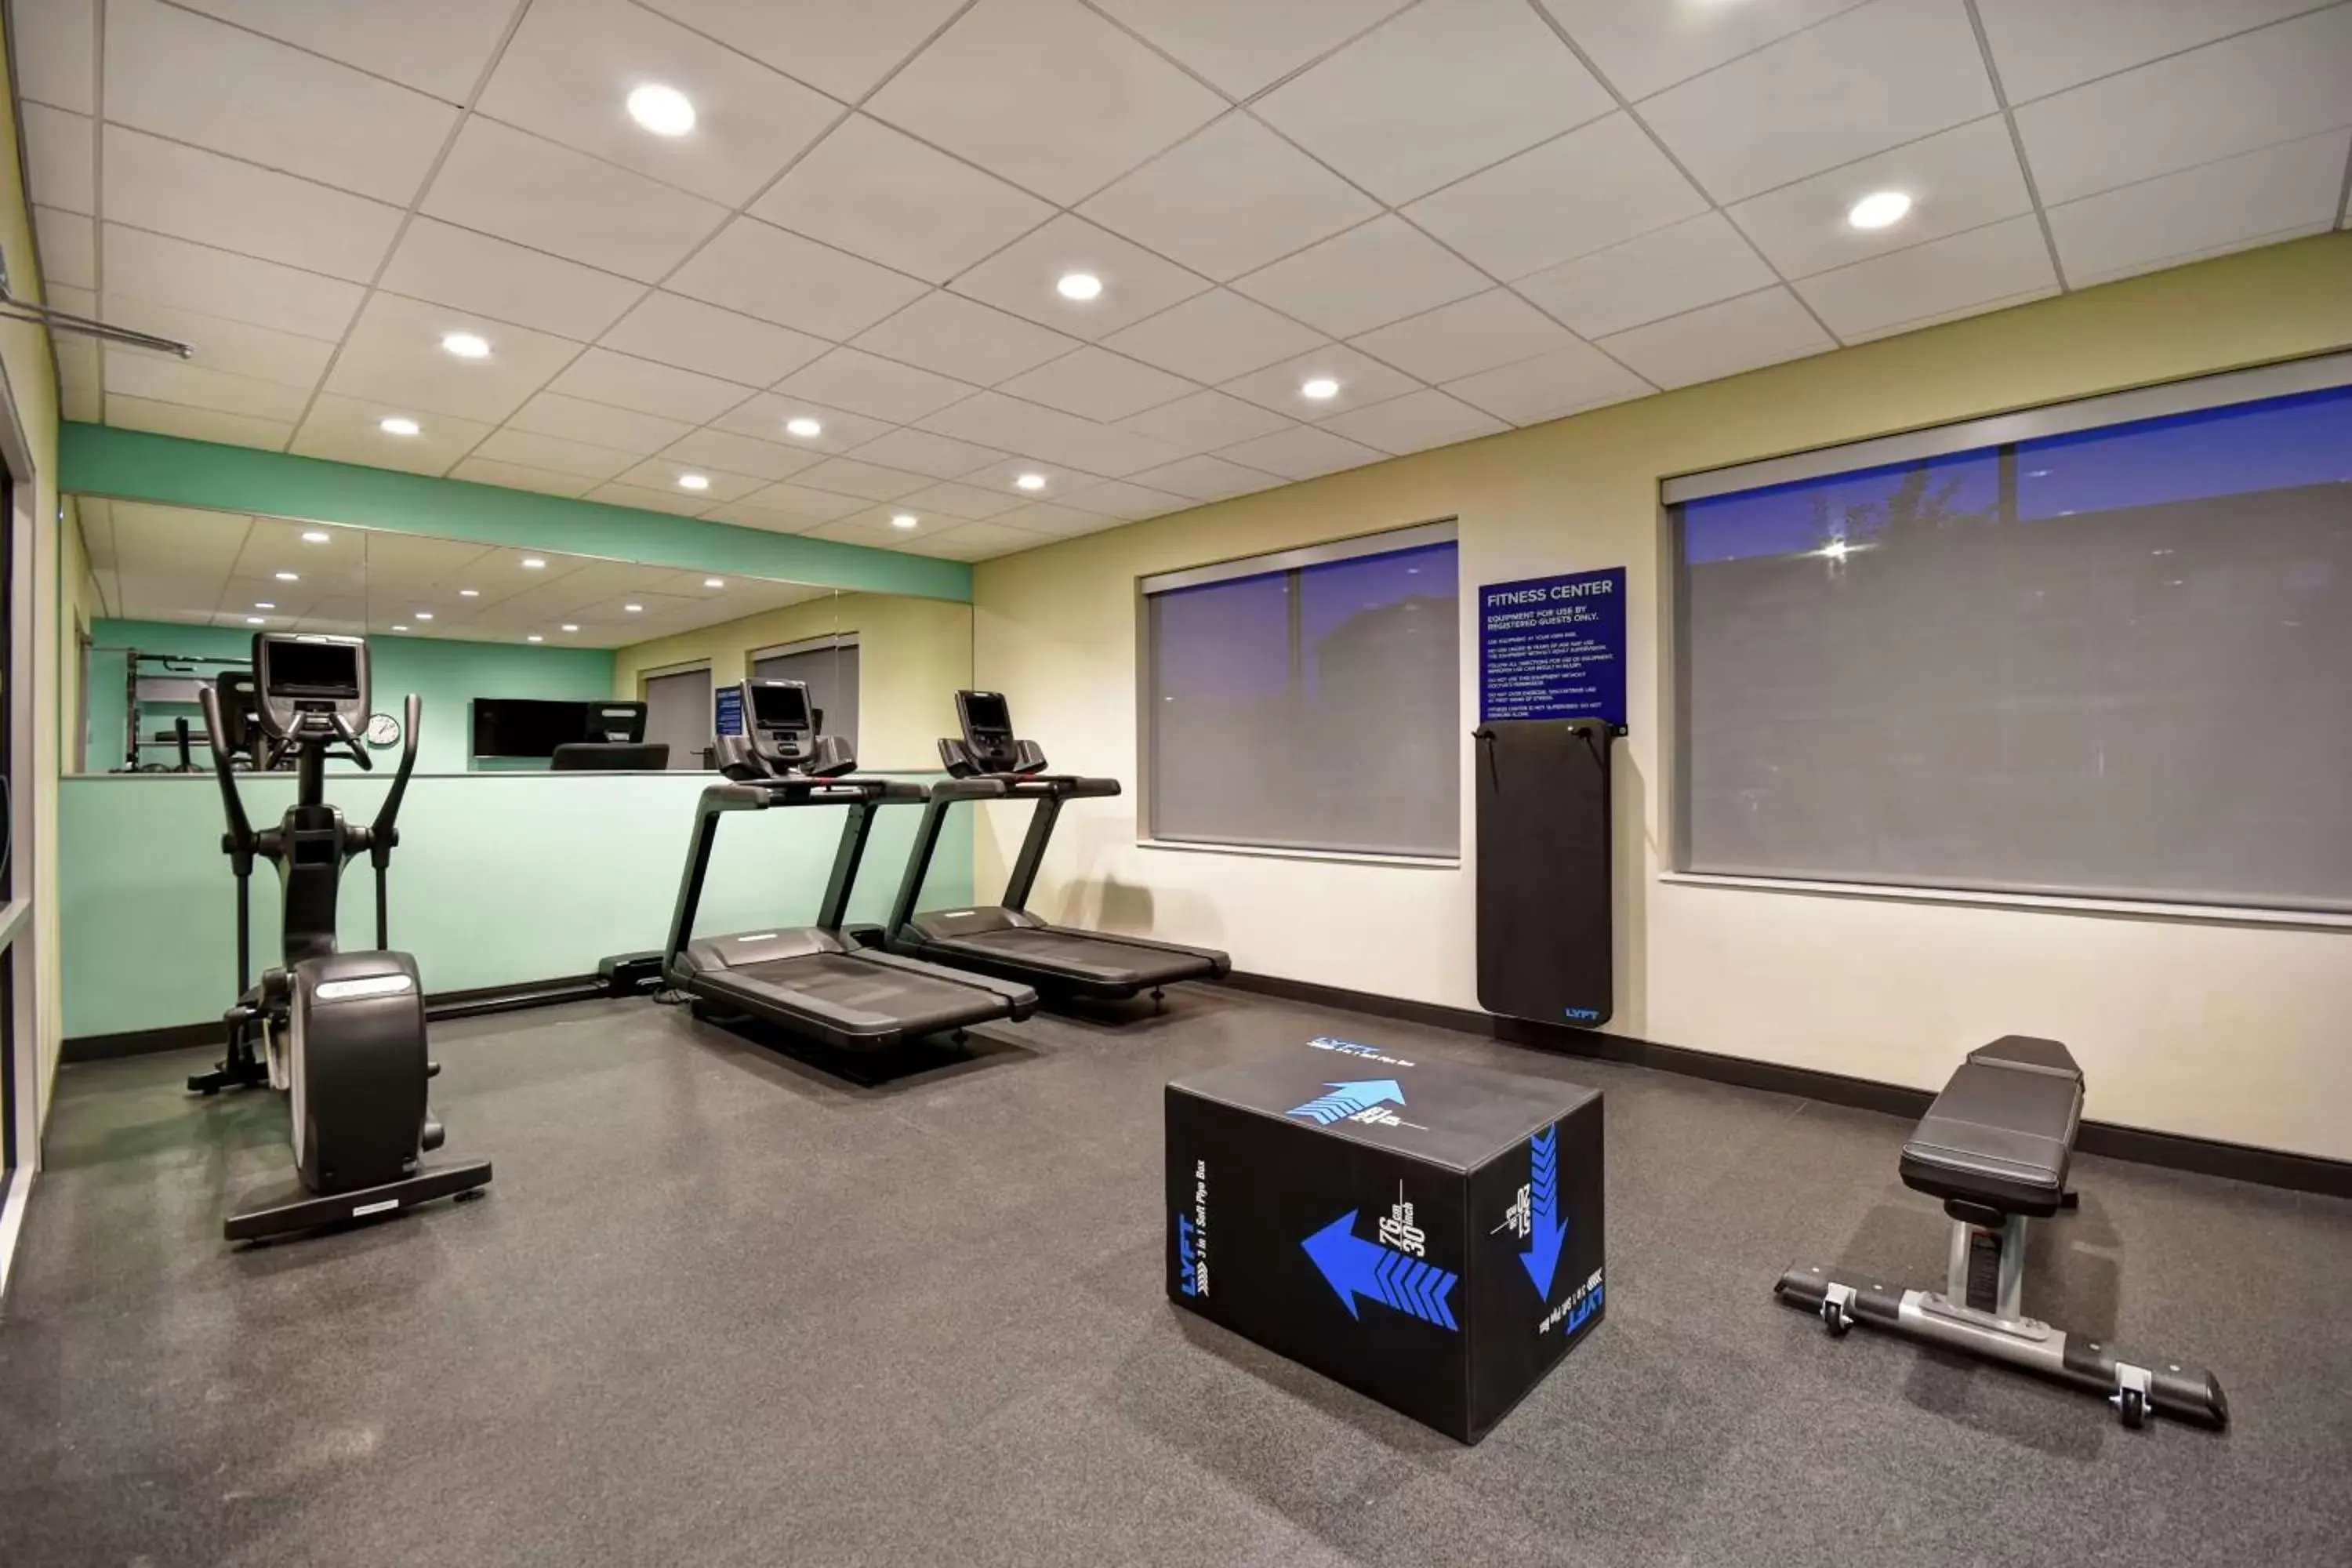 Fitness centre/facilities, Fitness Center/Facilities in Tru By Hilton Cincinnati Airport South Florence